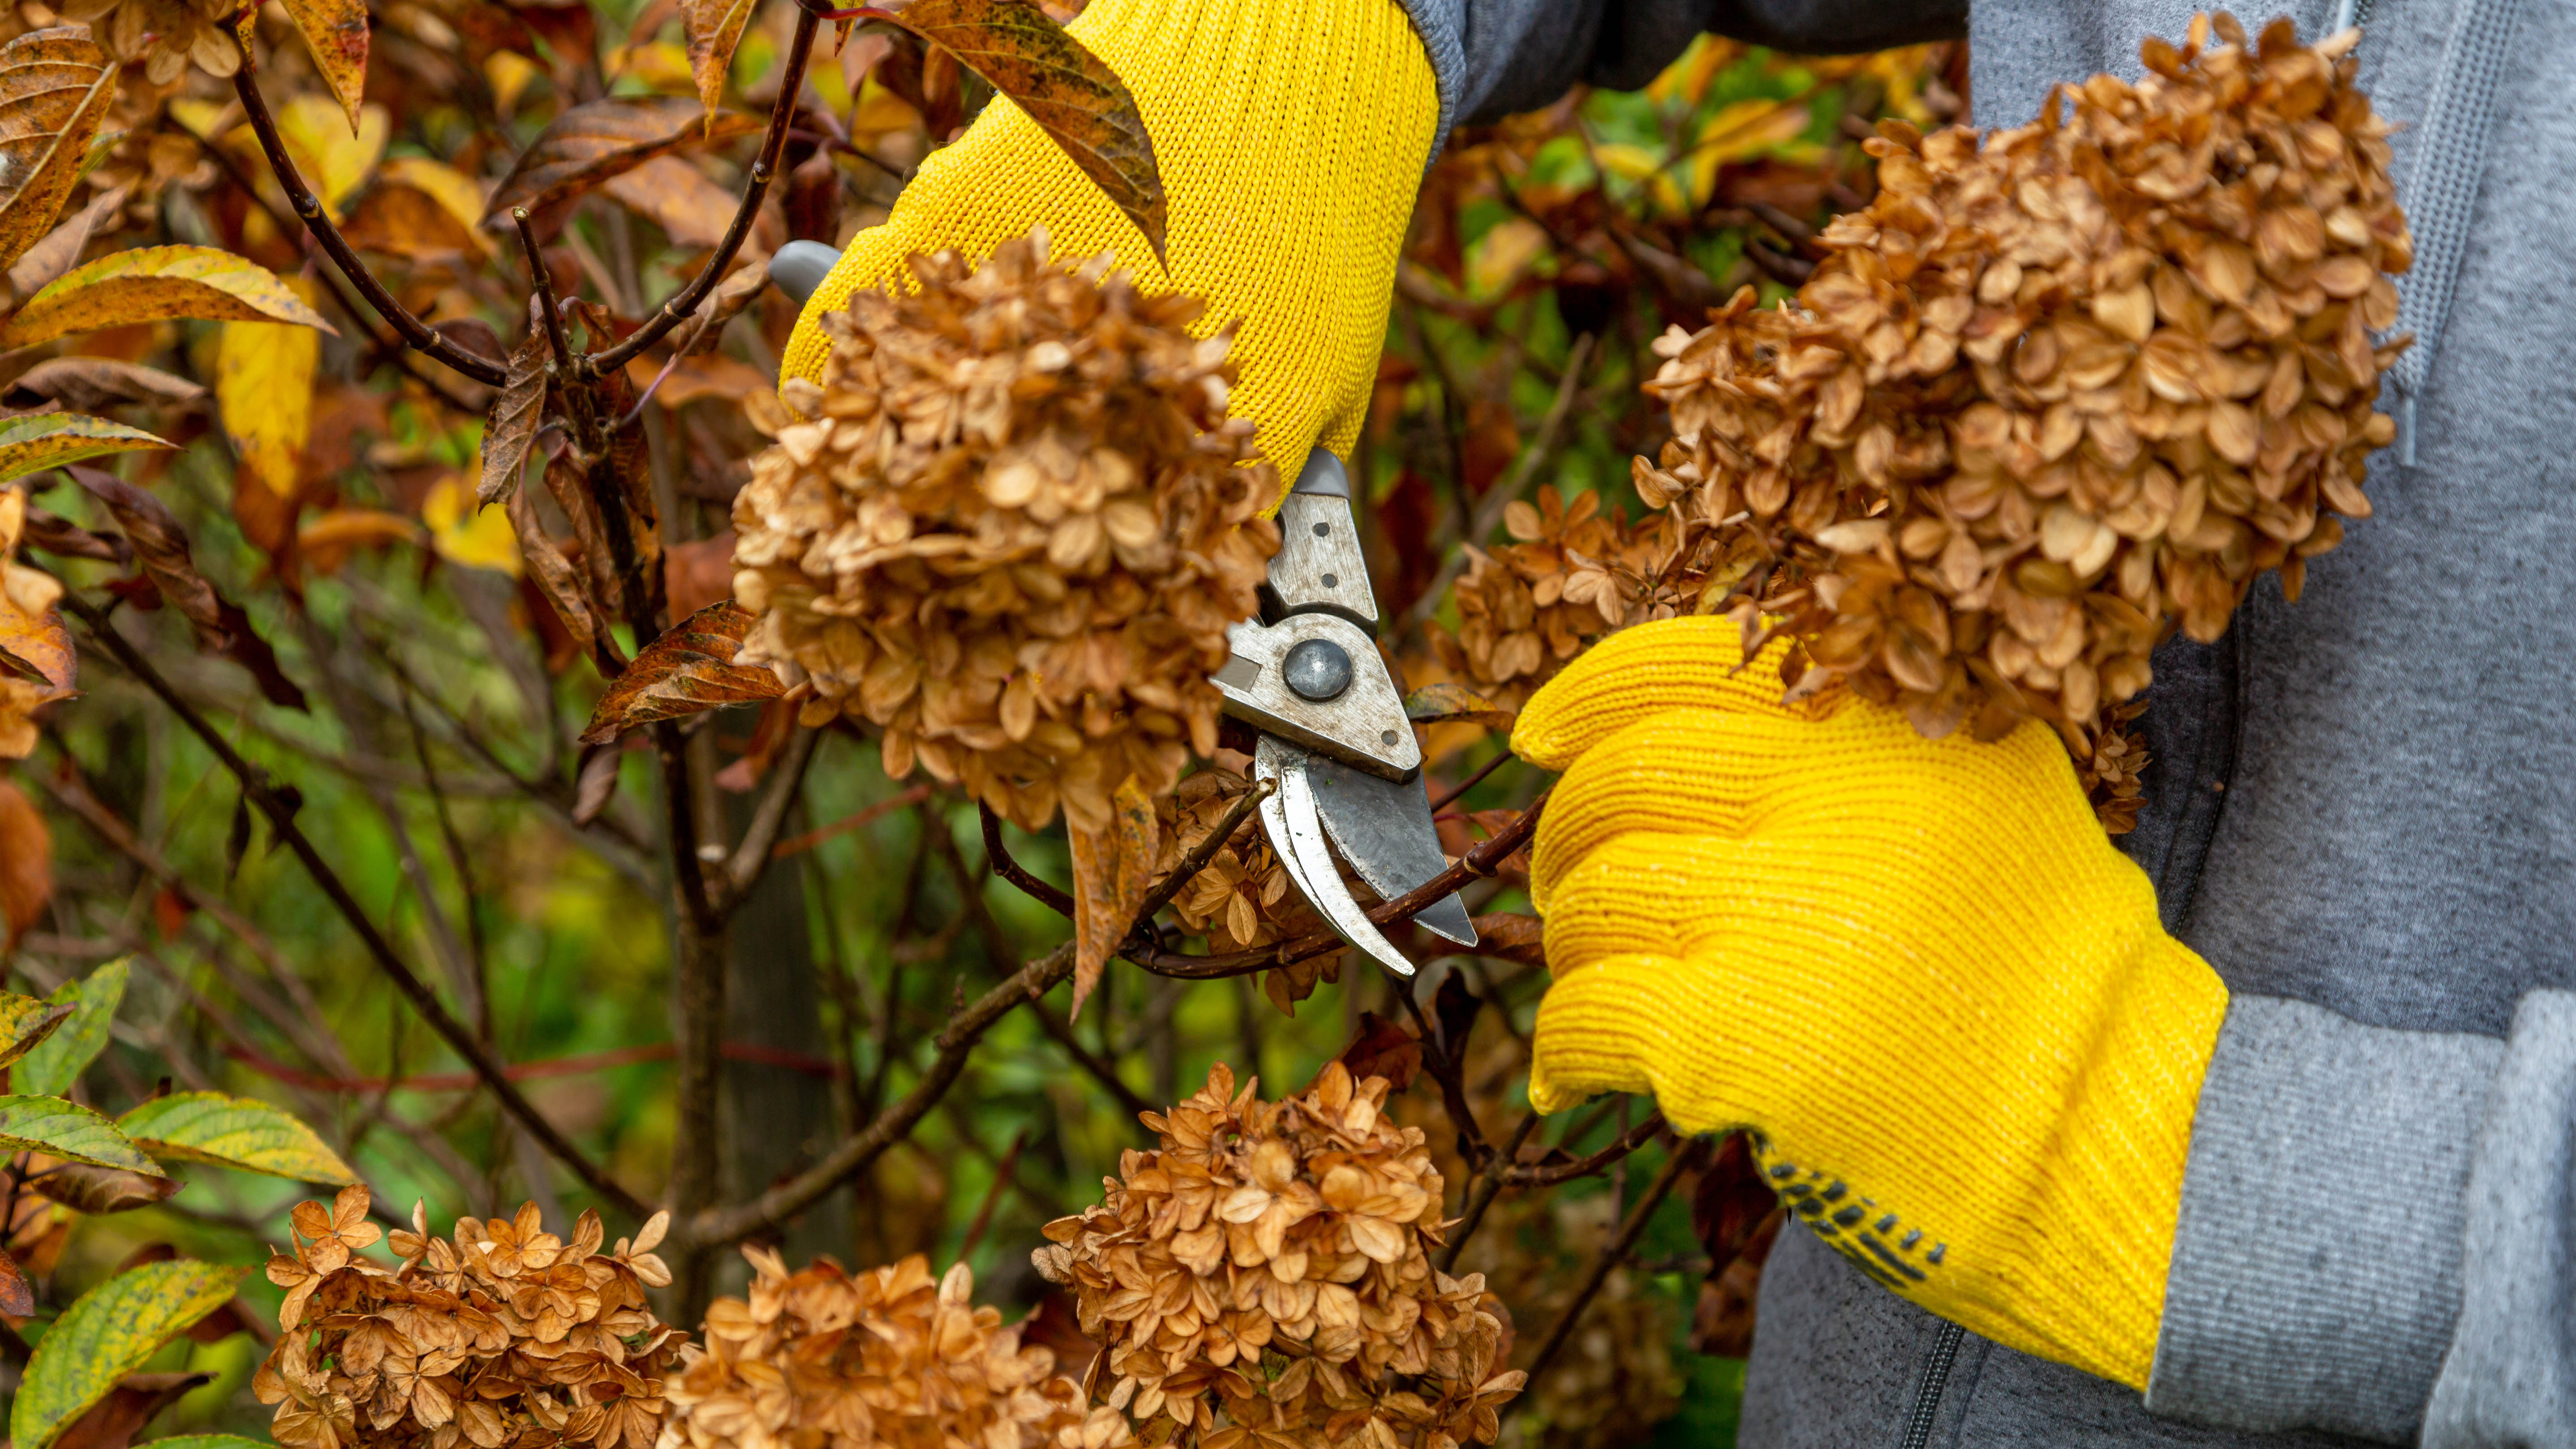 Someone wearing gardening gloves deadens hydrangea flowers with pruning shears